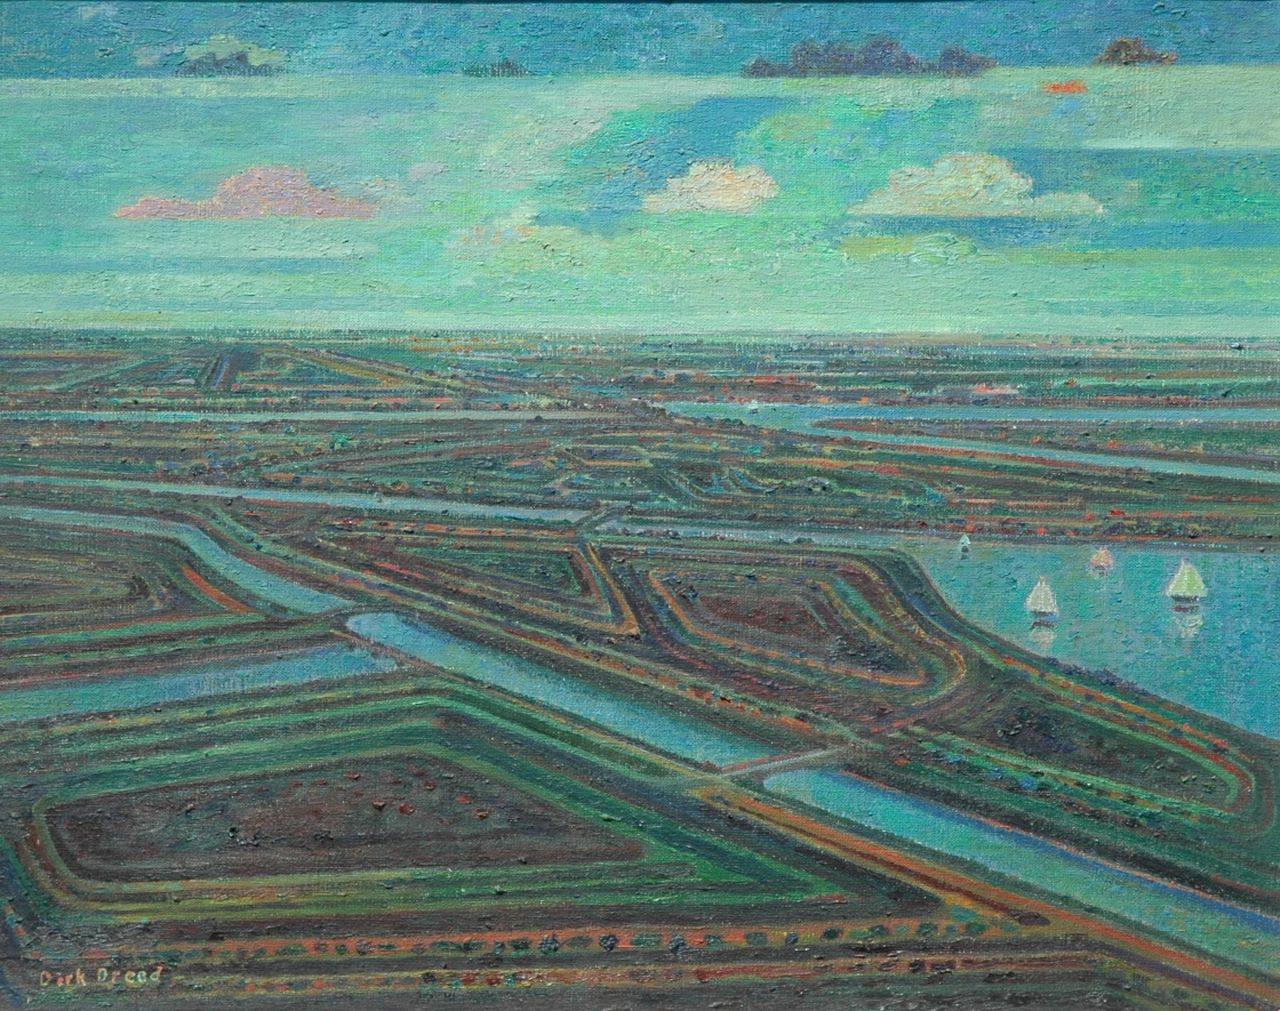 Breed D.C.  | 'Dirk' Cornelis Breed, Panorama 3, olieverf op doek 40,2 x 49,8 cm, gesigneerd linksonder